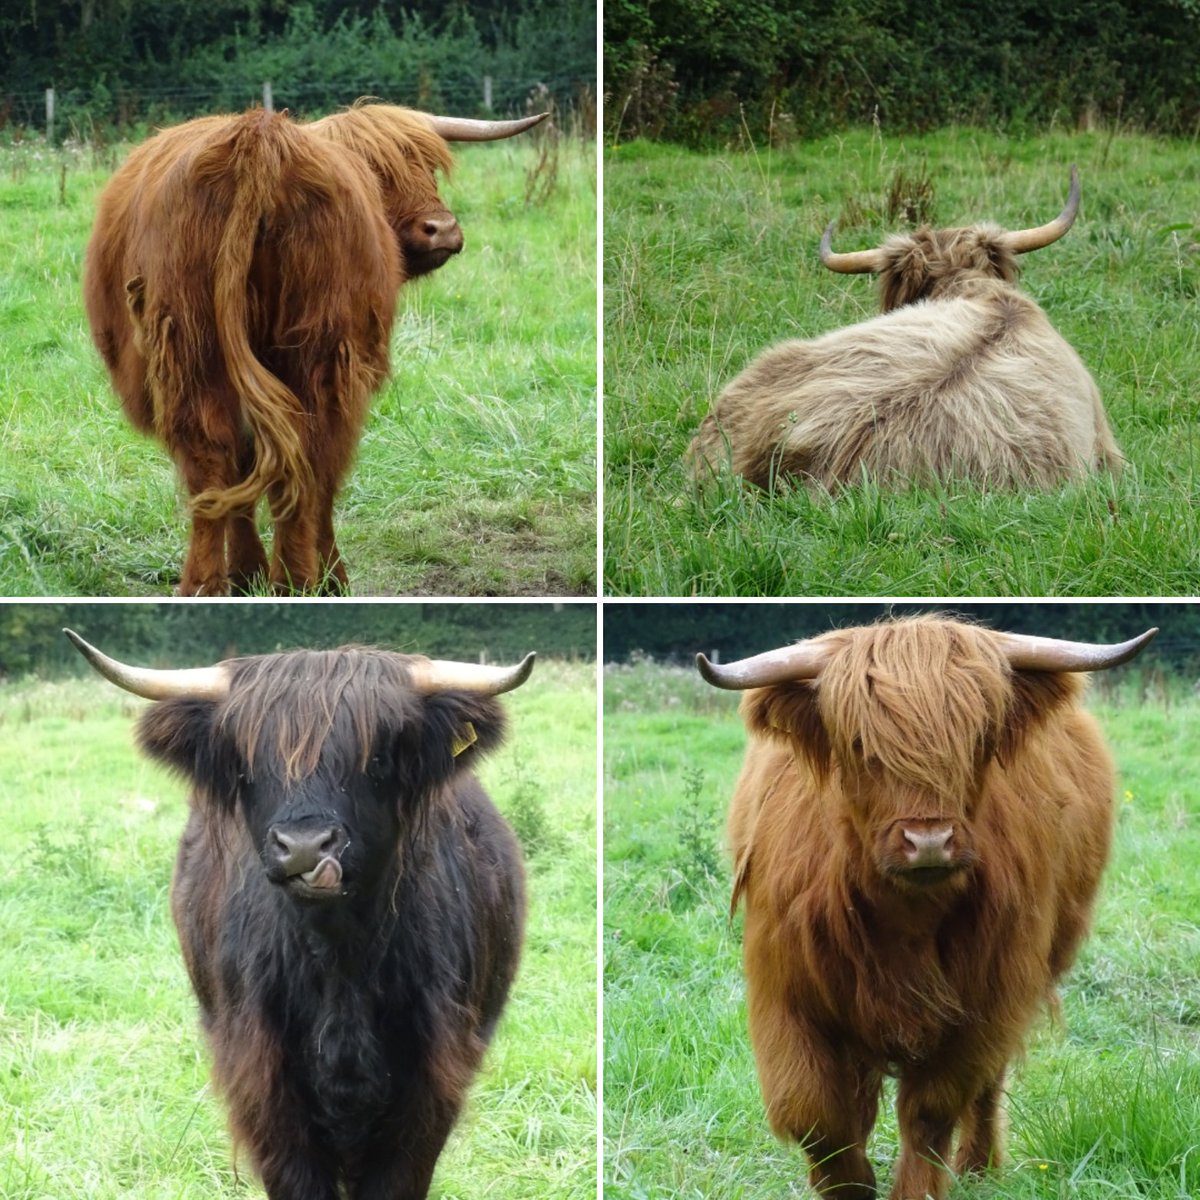 My favourite highlanders ❤️🐮 #highlandcattle #highlandcows #hairycows #hairycoos #cattle #bovines #animals #farmanimals #animallover #wolds #yorkshirewolds #eastriding #eastridingofyorkshire #countrylife #yorkshirelife #iloveyorkshire #summer #august